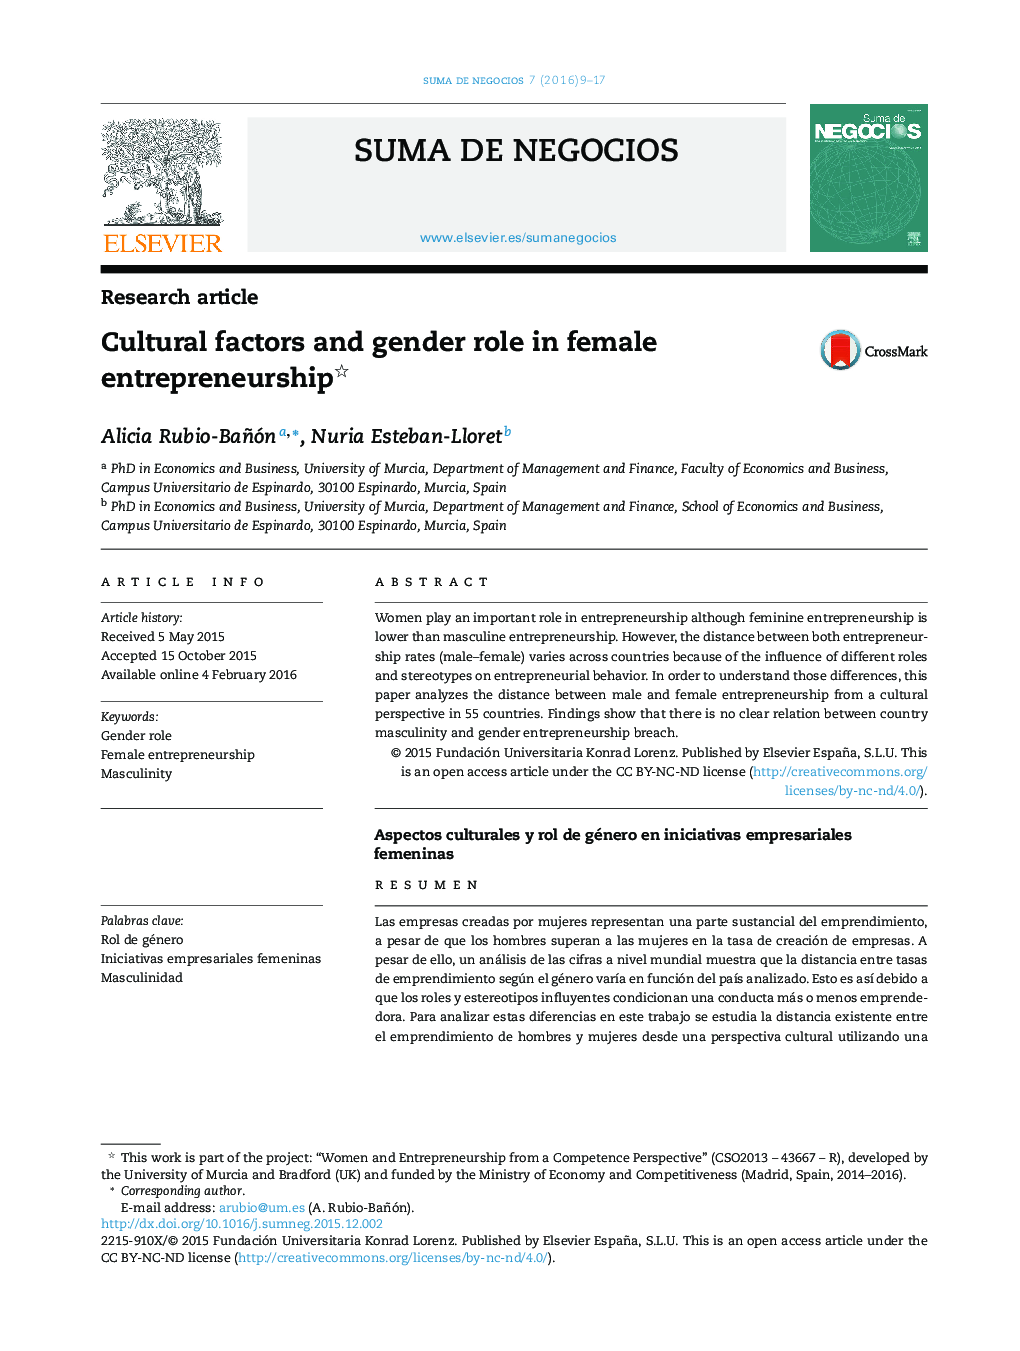 Cultural factors and gender role in female entrepreneurship 